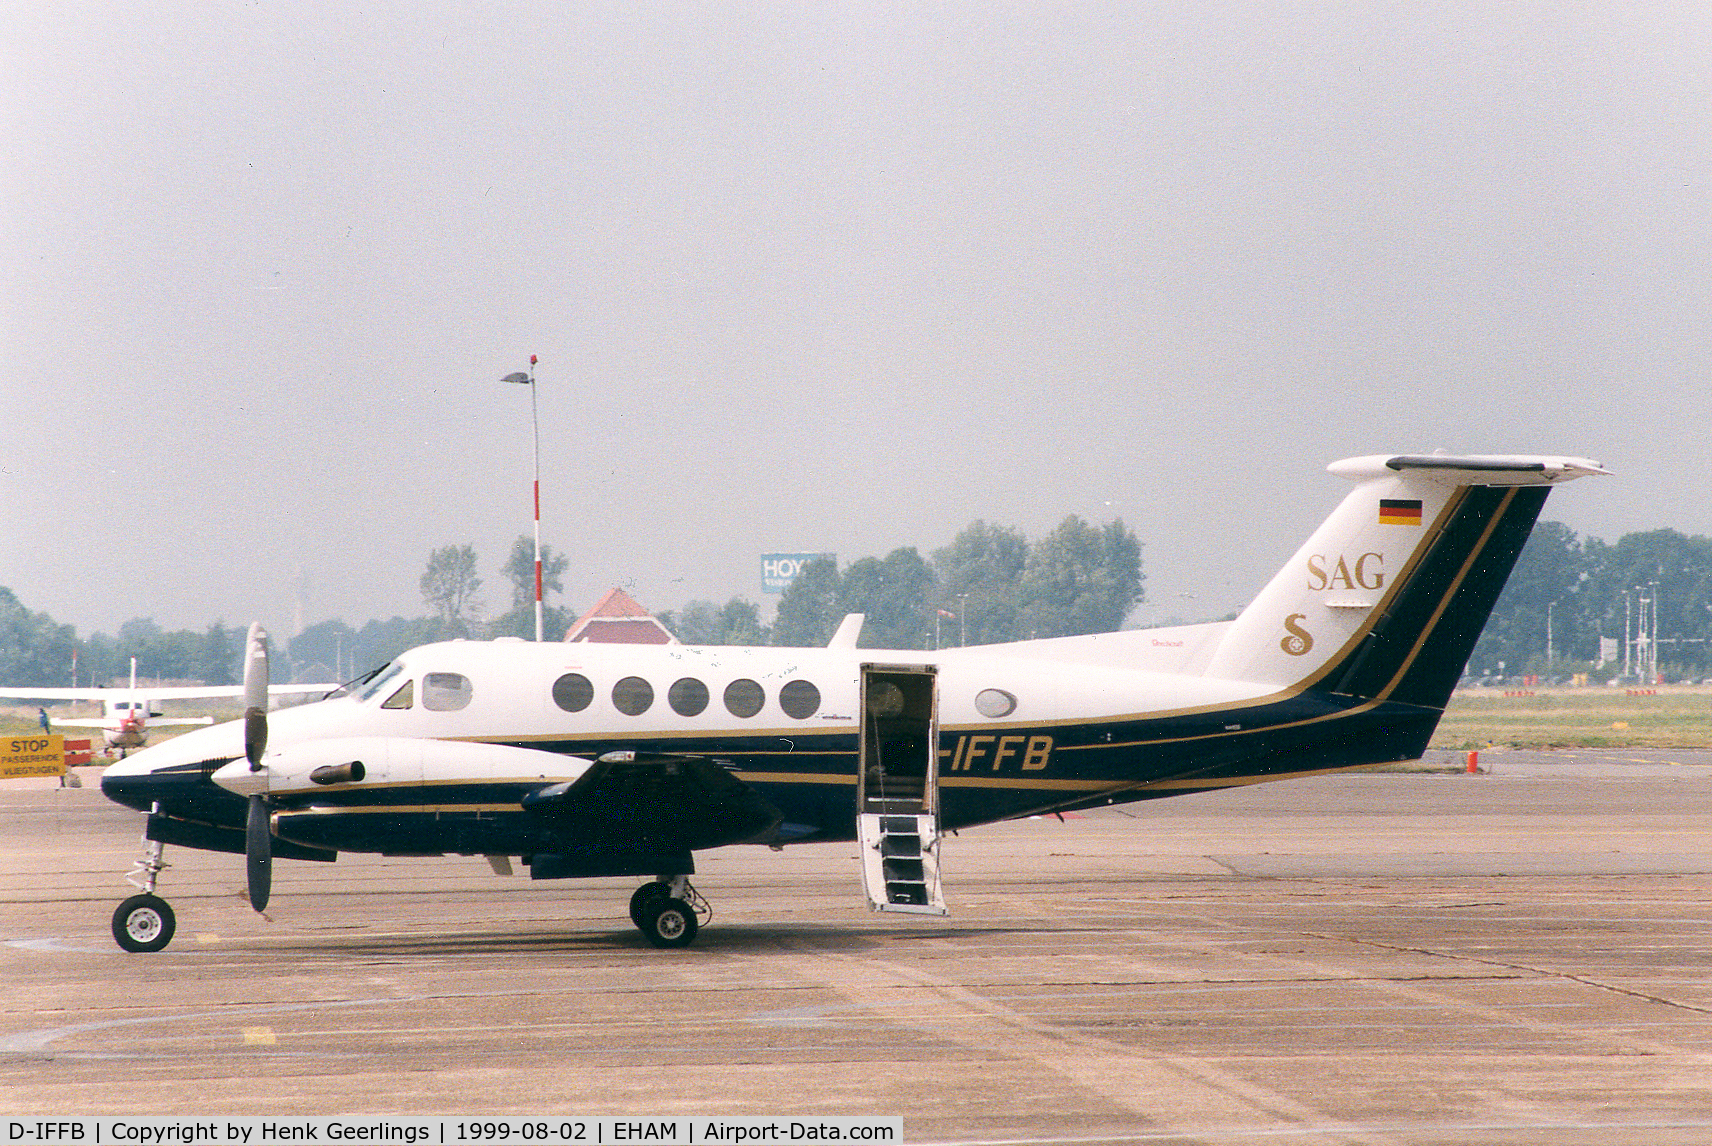 D-IFFB, 1993 Beech Super King Air 300LW C/N FA-224, Senator Aviation